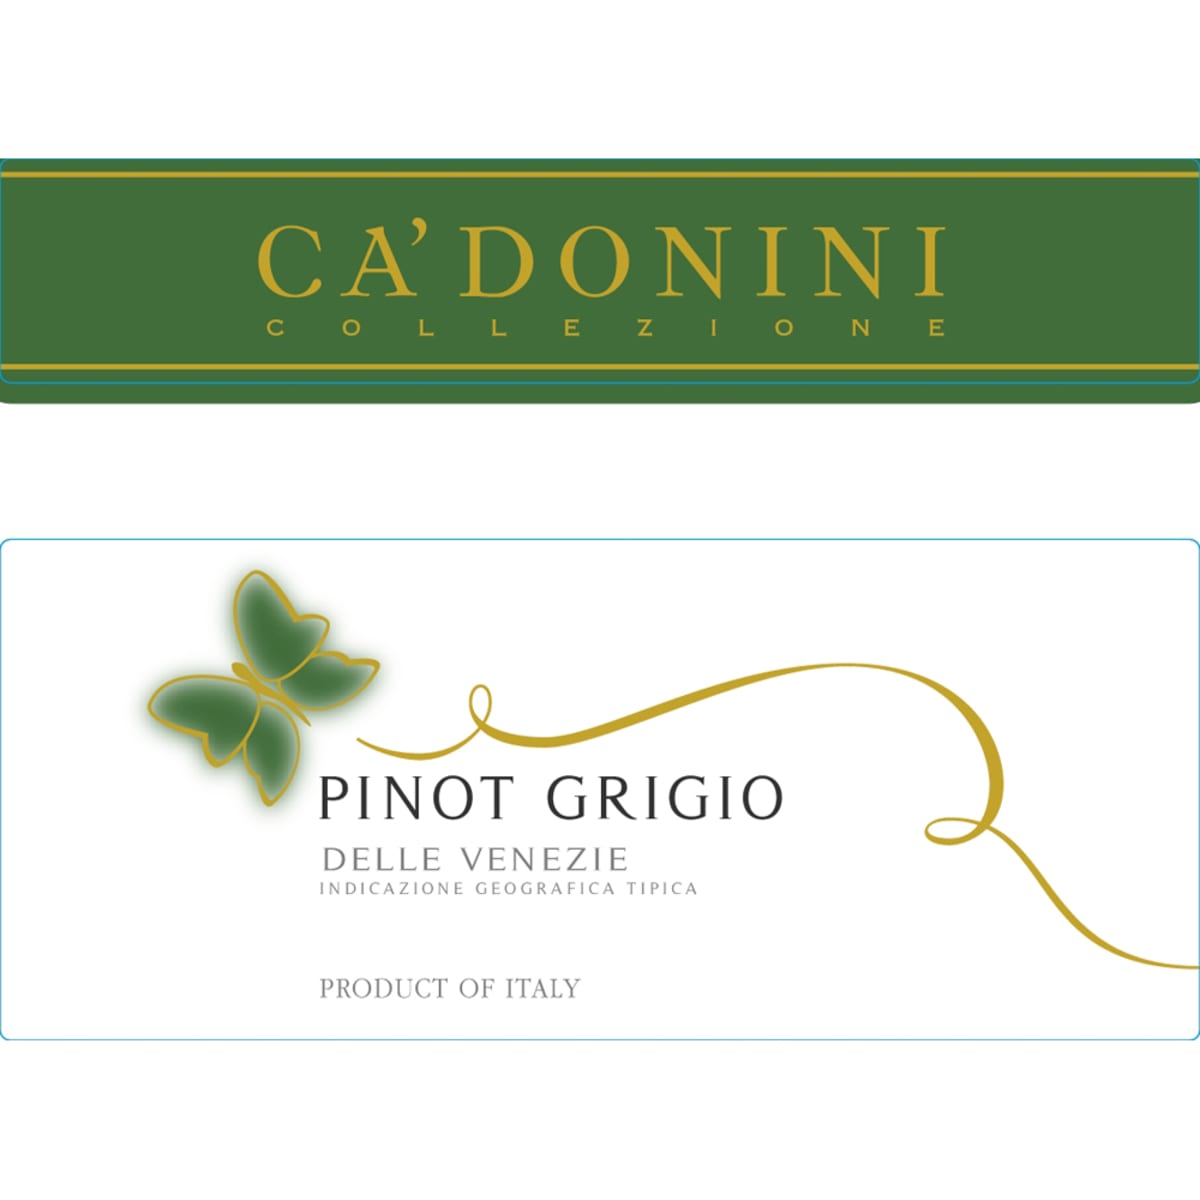 Donini Pinot Grigio 2015 Front Label